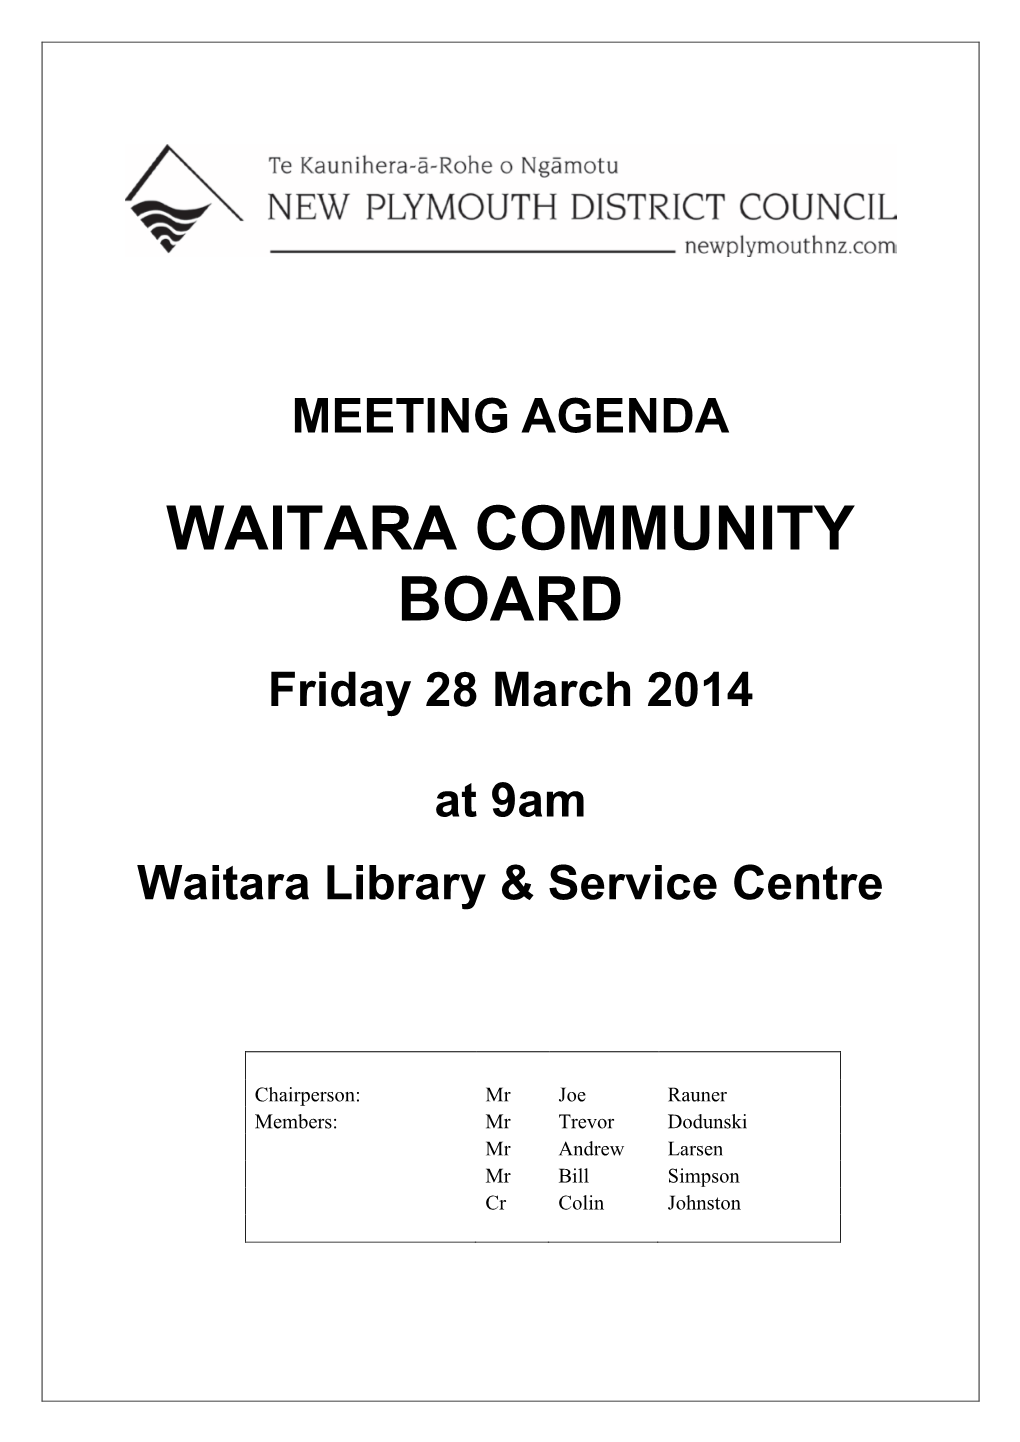 Waitara Community Board